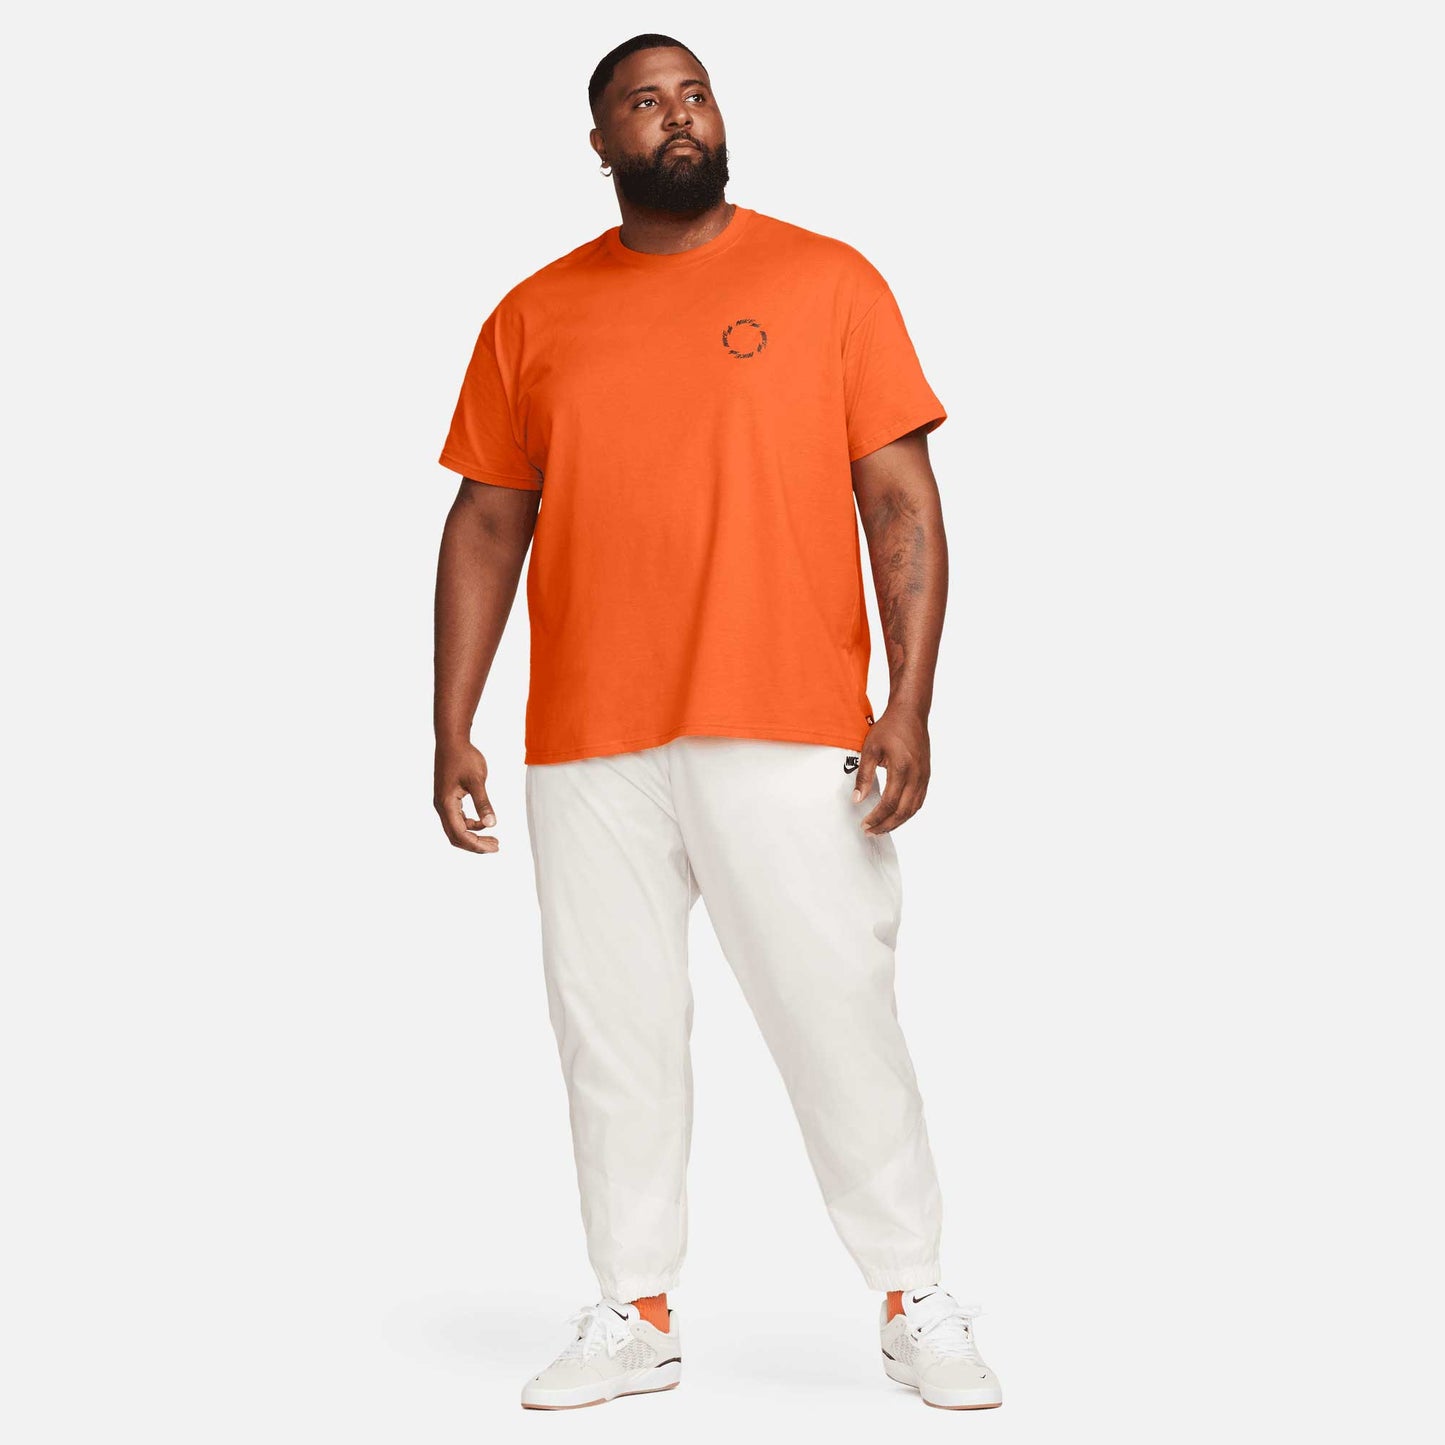 Nike SB Wheel T-Shirt, safety orange - Tiki Room Skateboards - 4